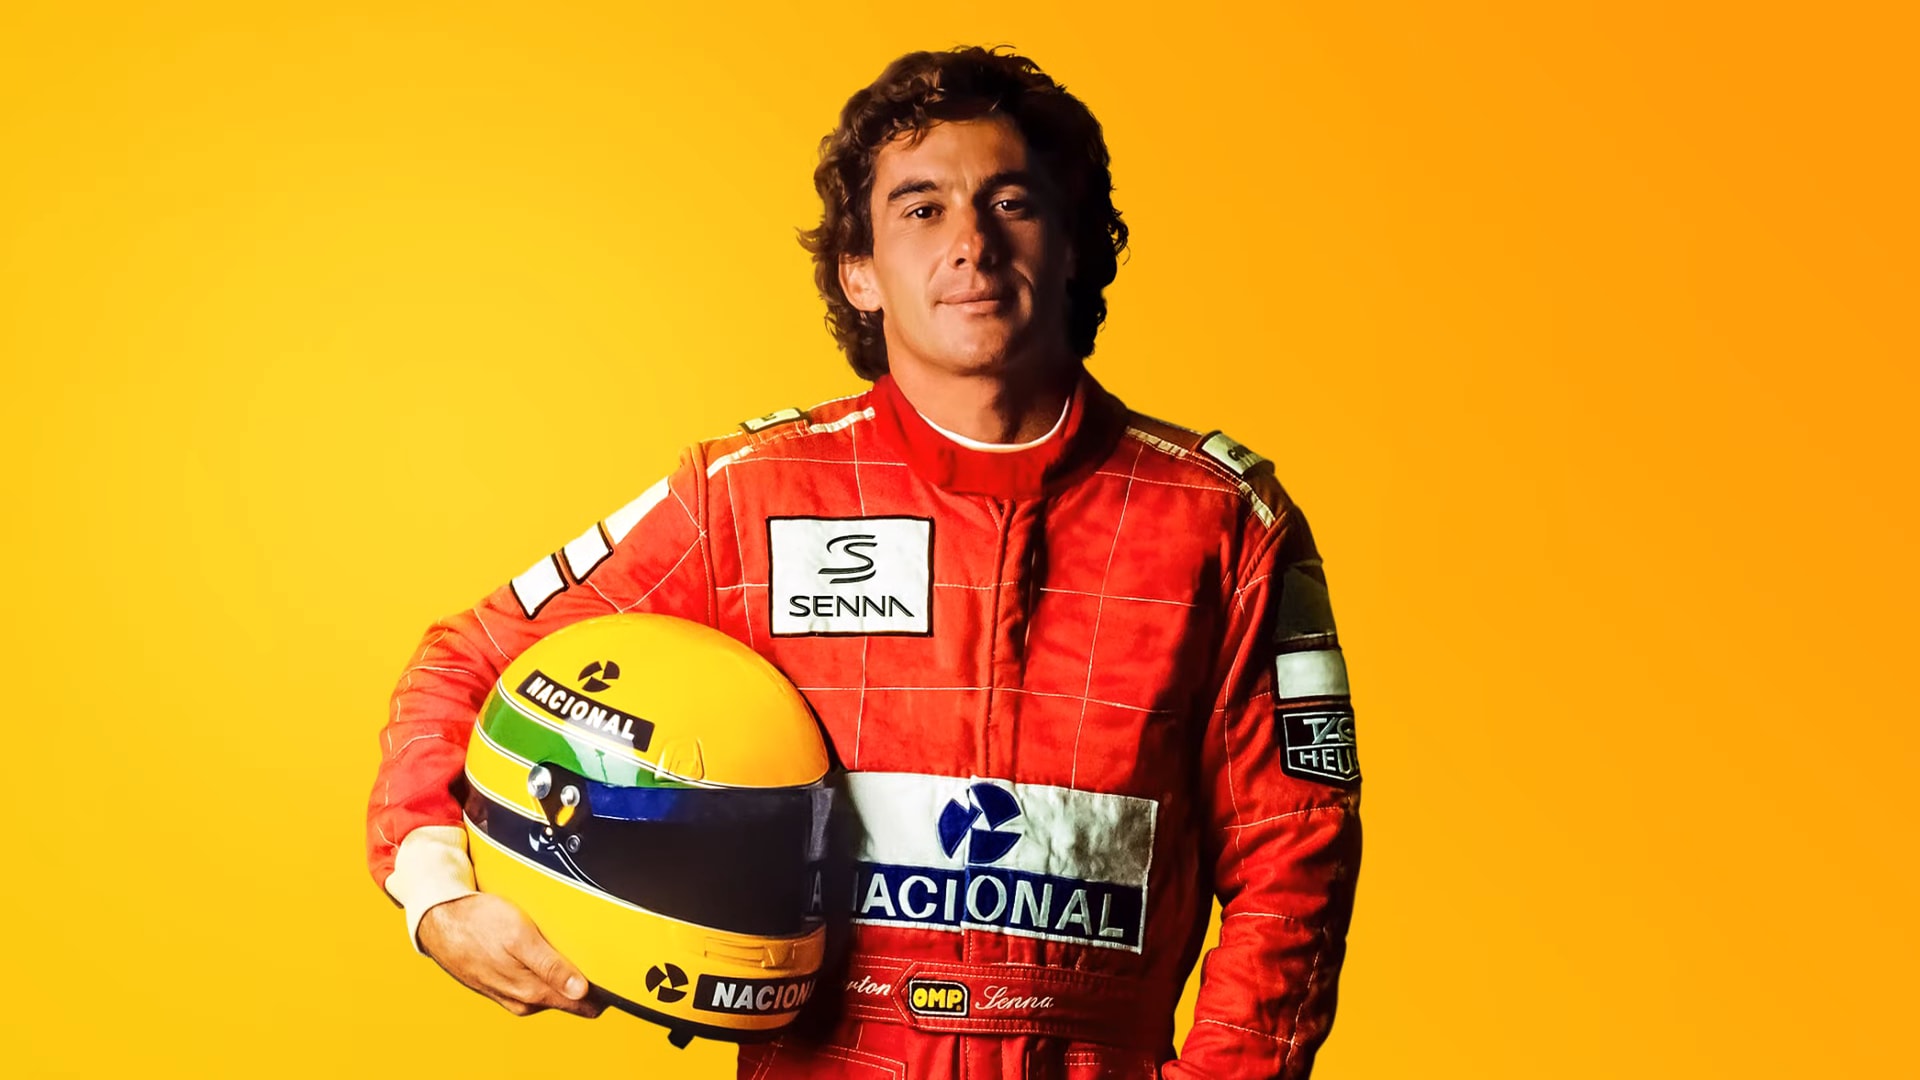 Tribute to Ayrton Senna